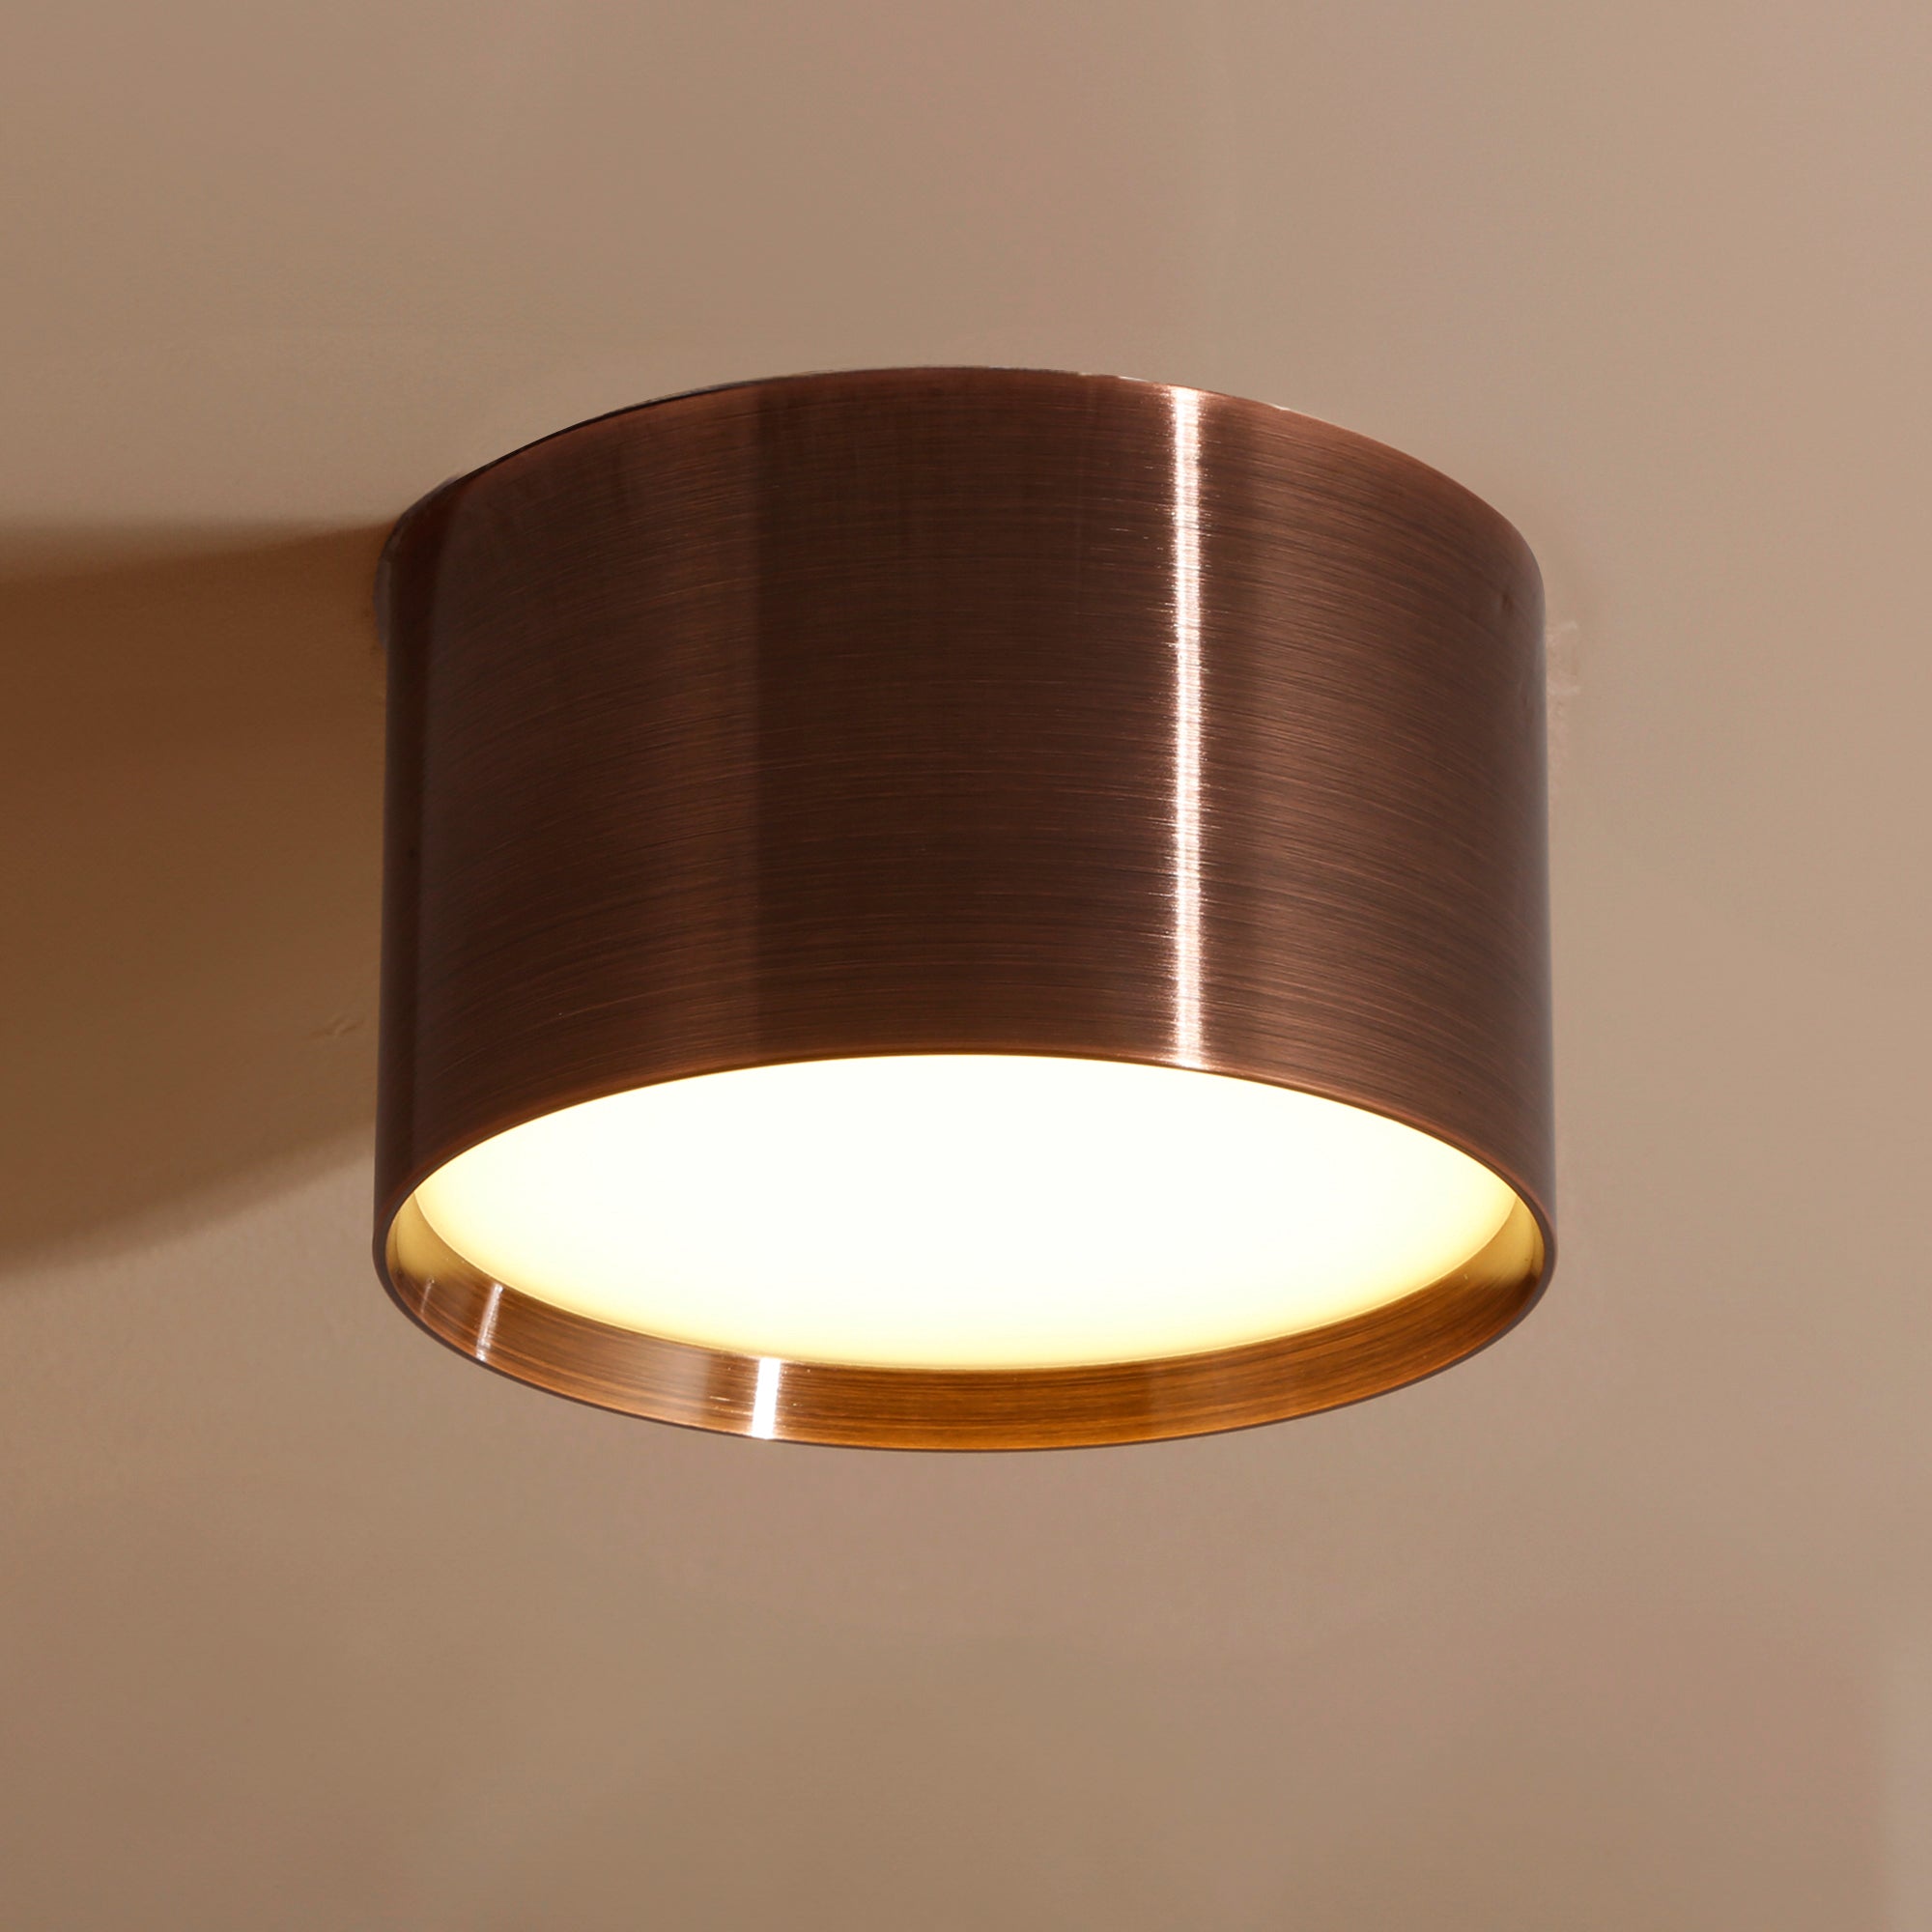 Bright Beauty Copper LED Ceiling Light Online